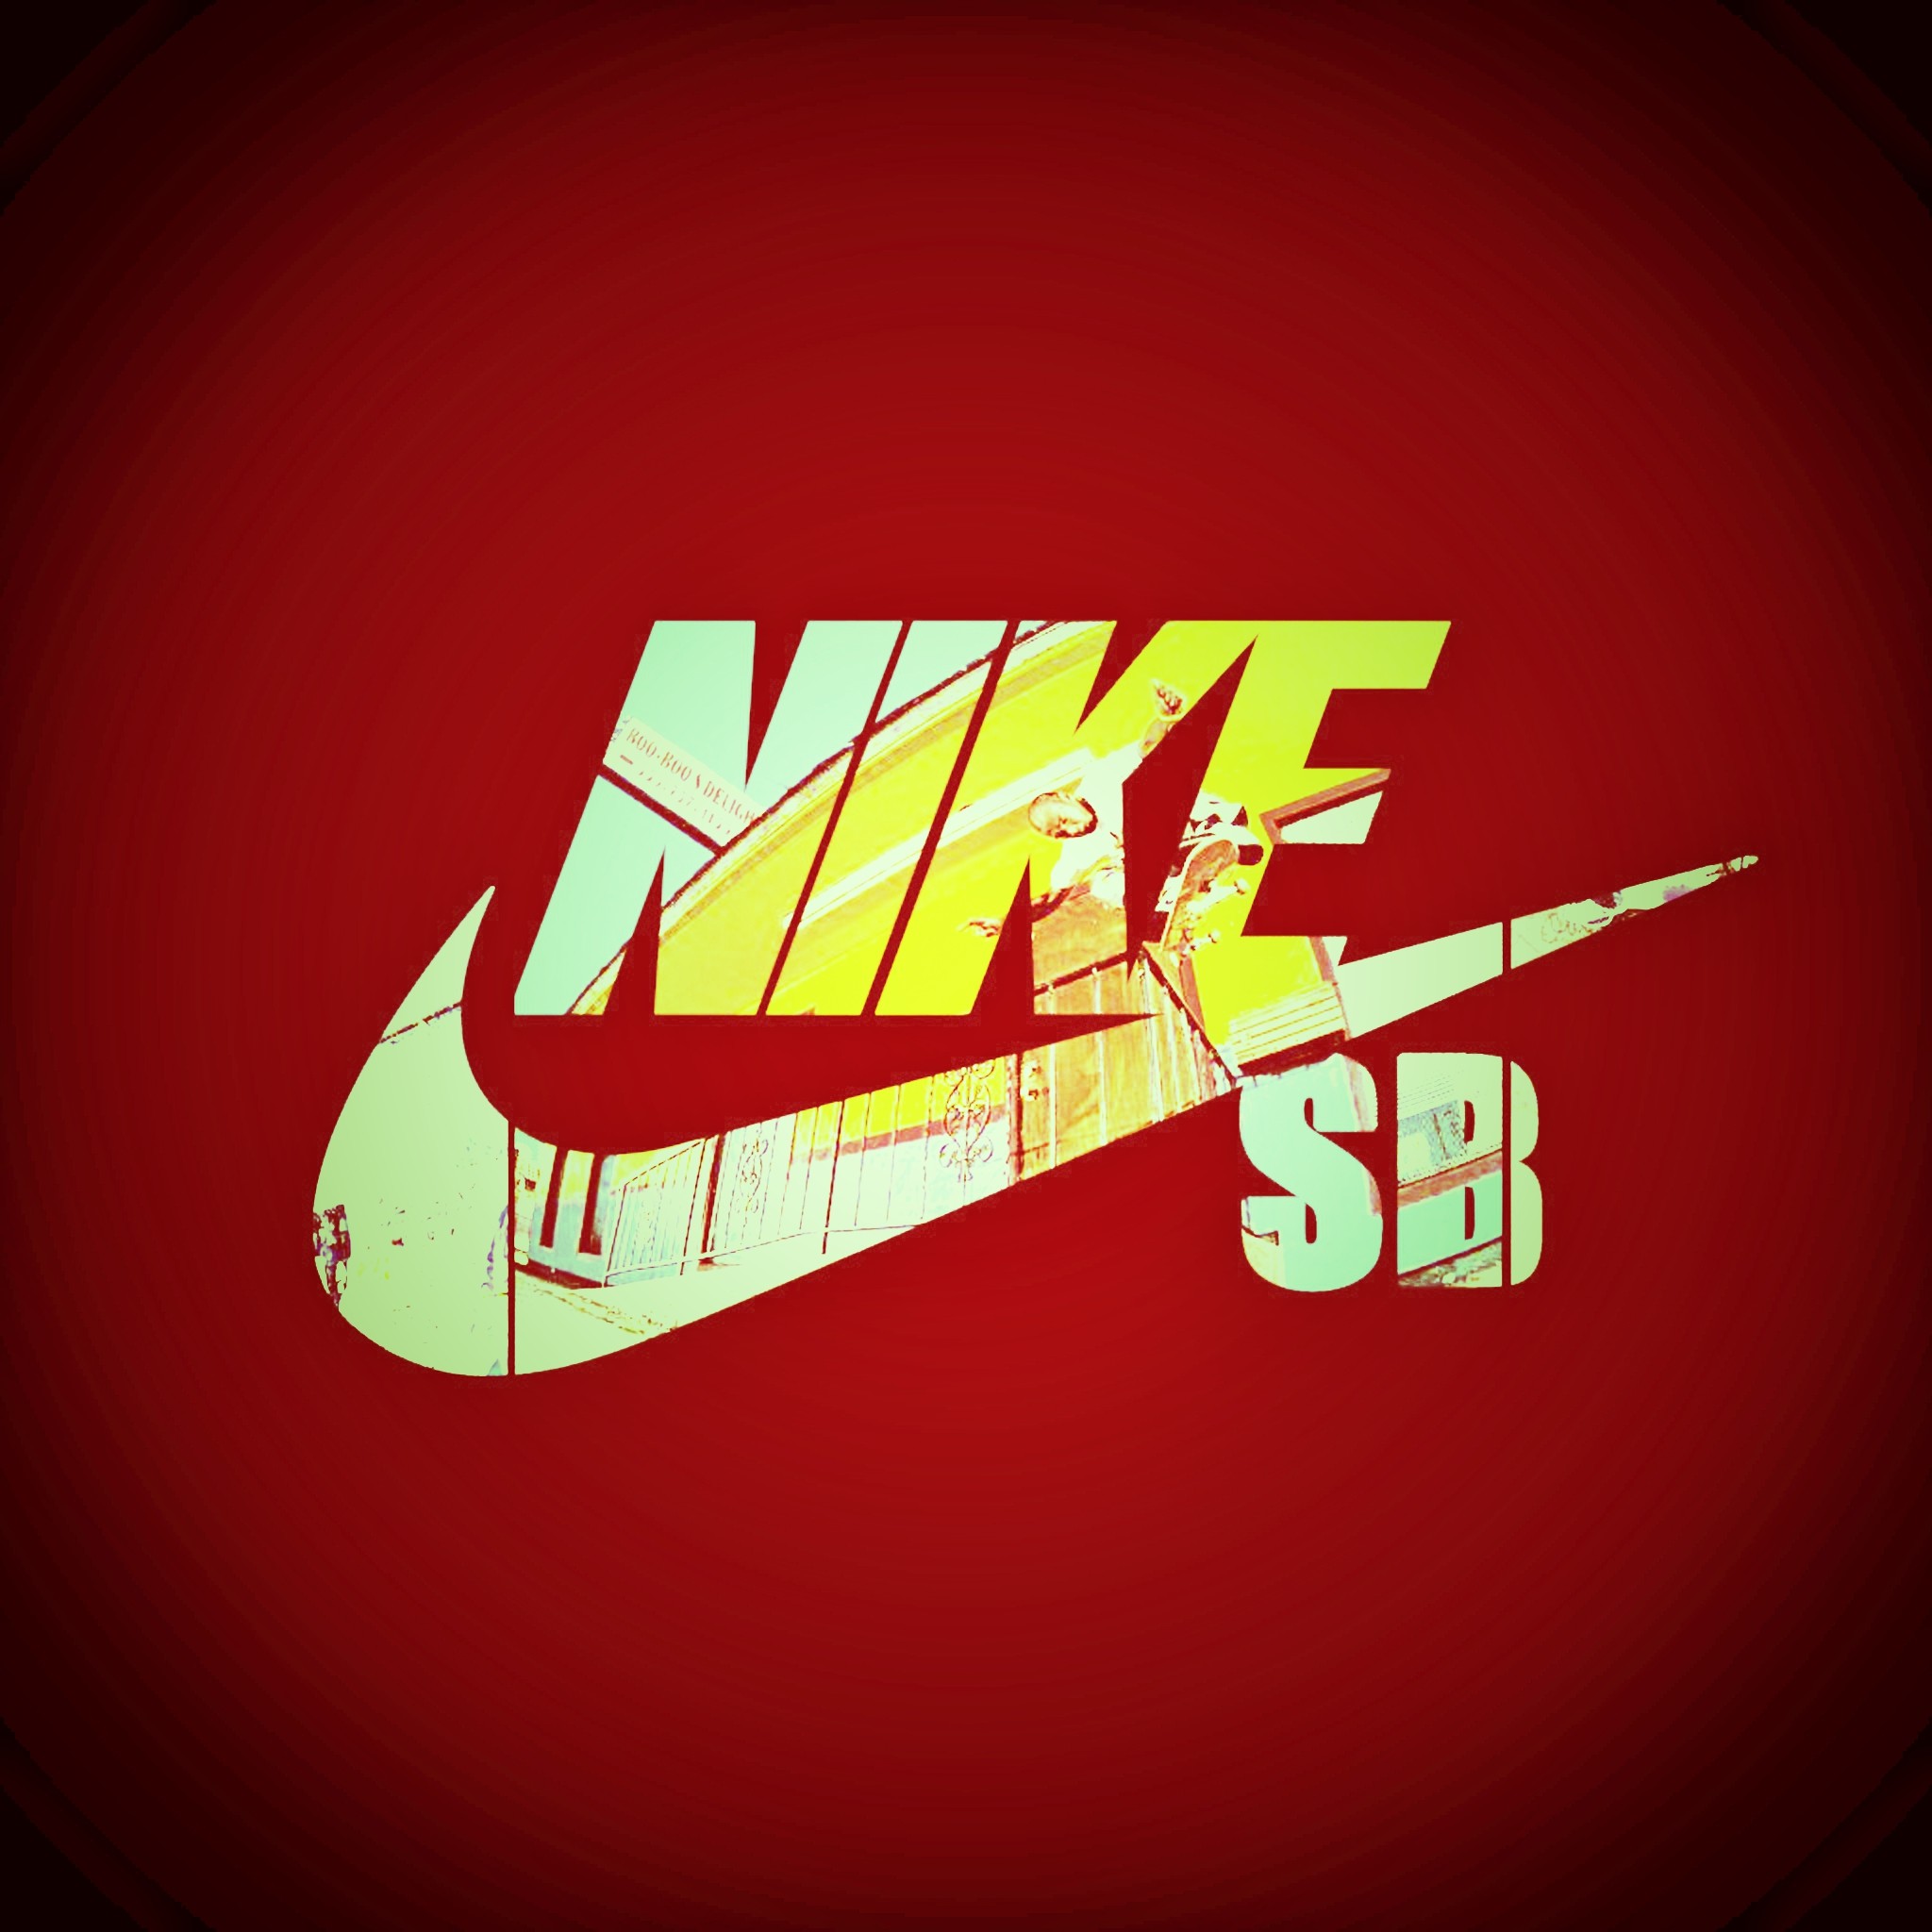 2048x2048 Nike SB wallpaper by jnusjnus on DeviantArt